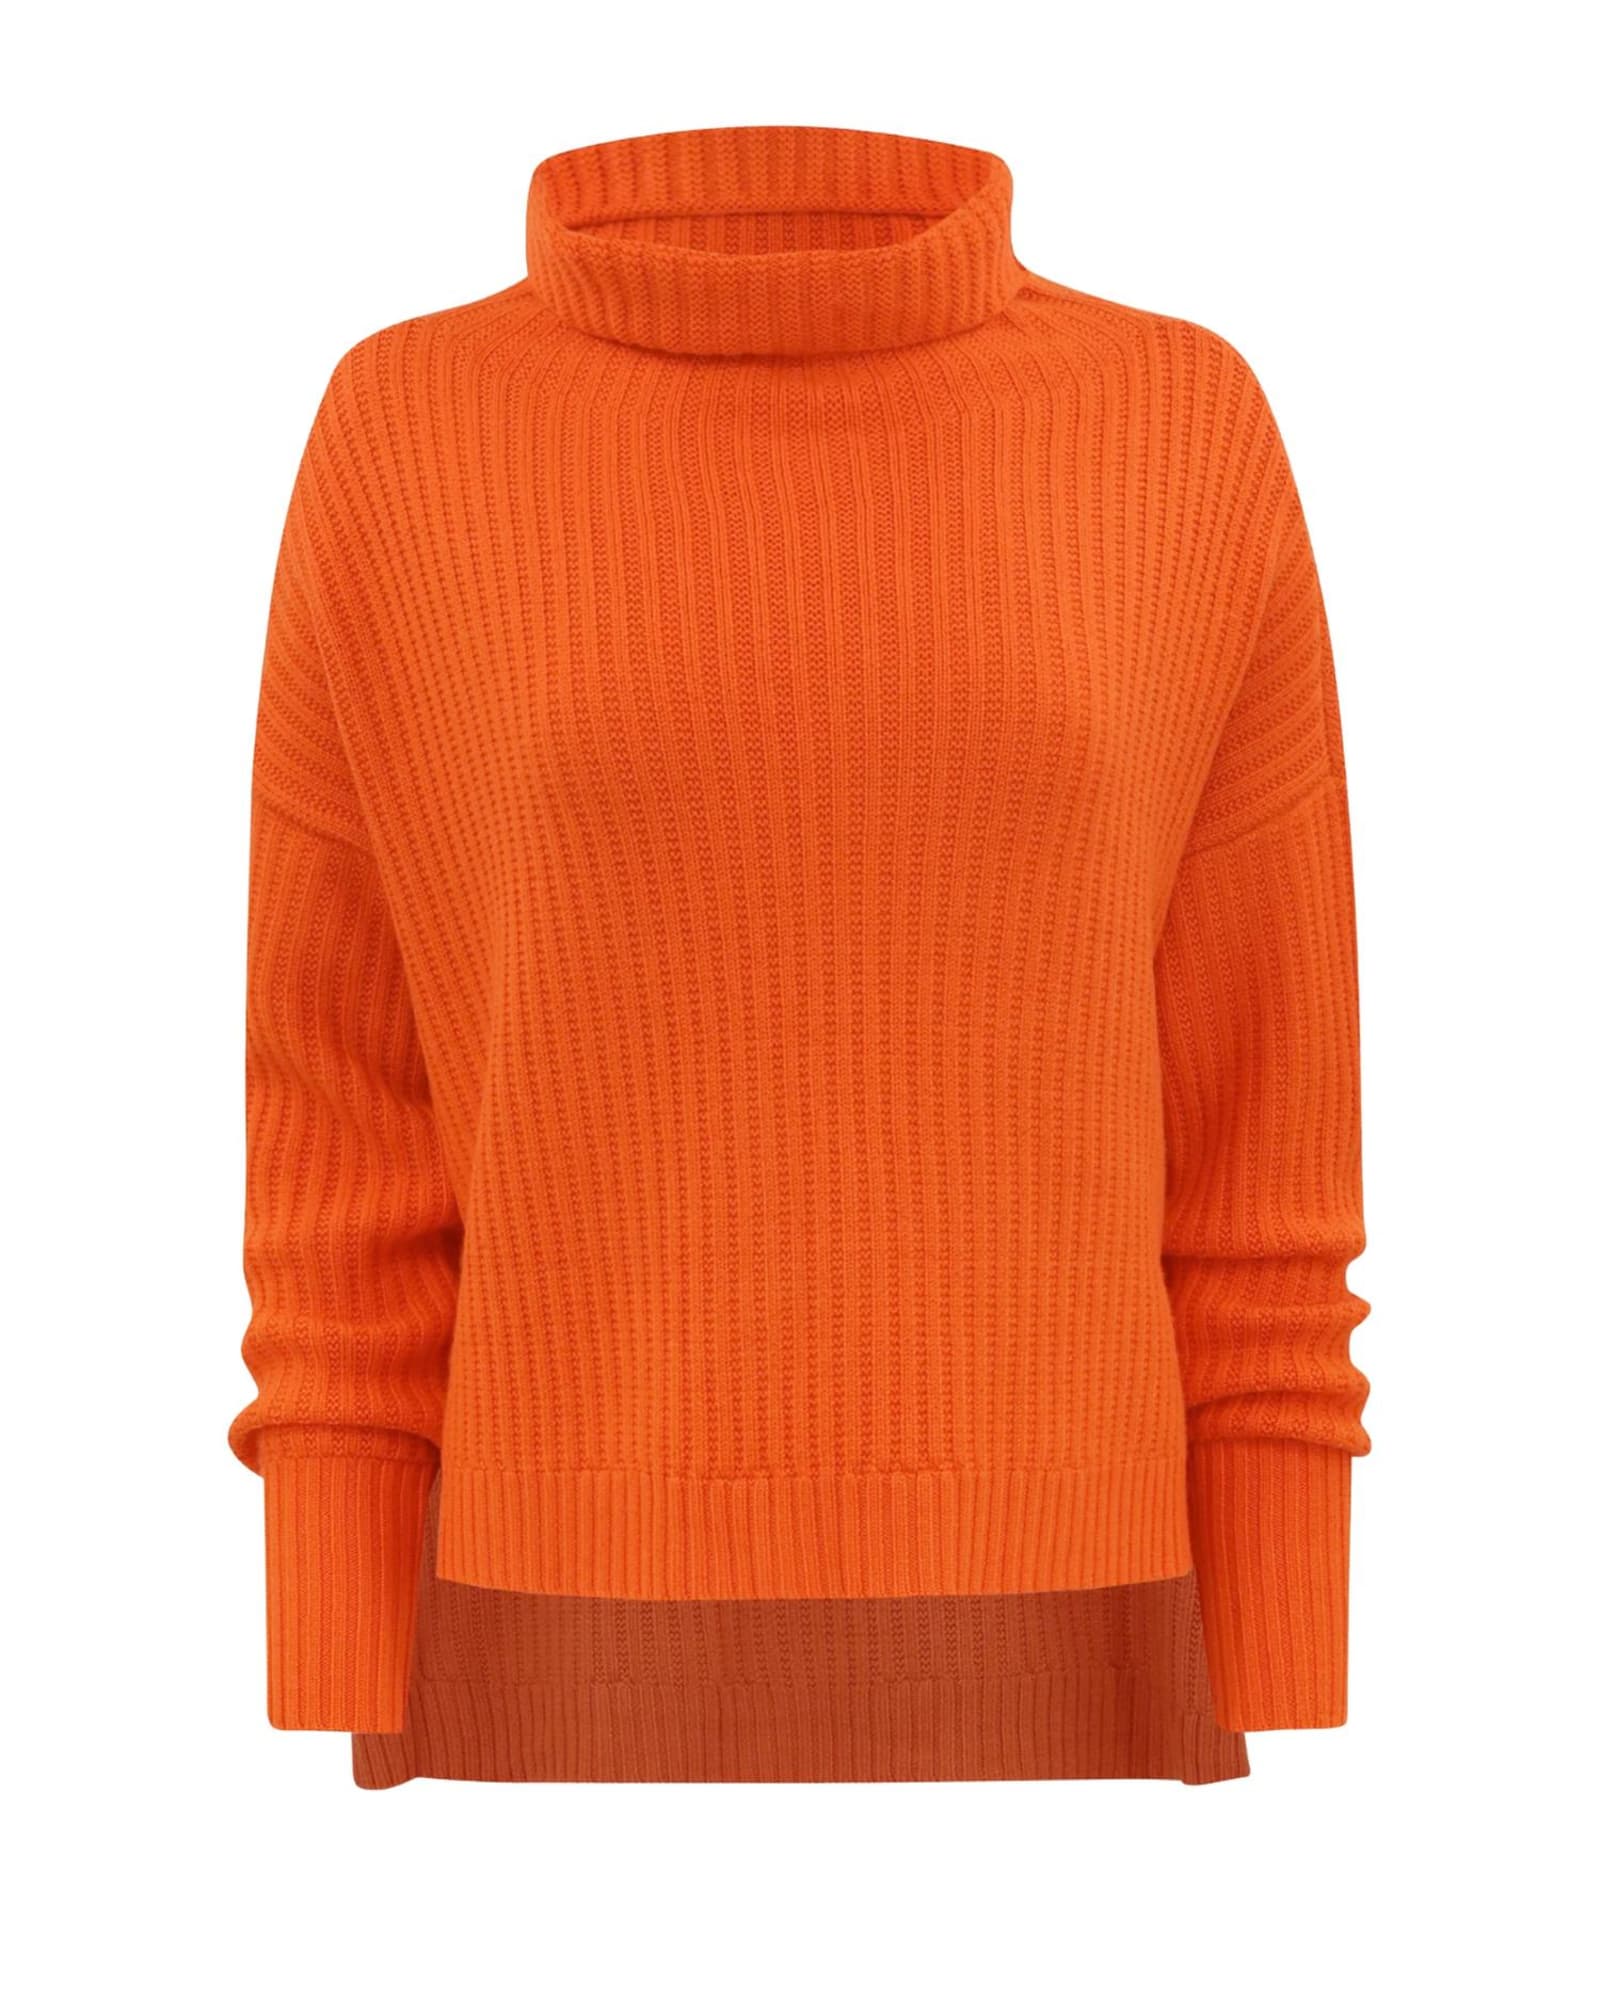 Everly Sweater in Orange | Orange